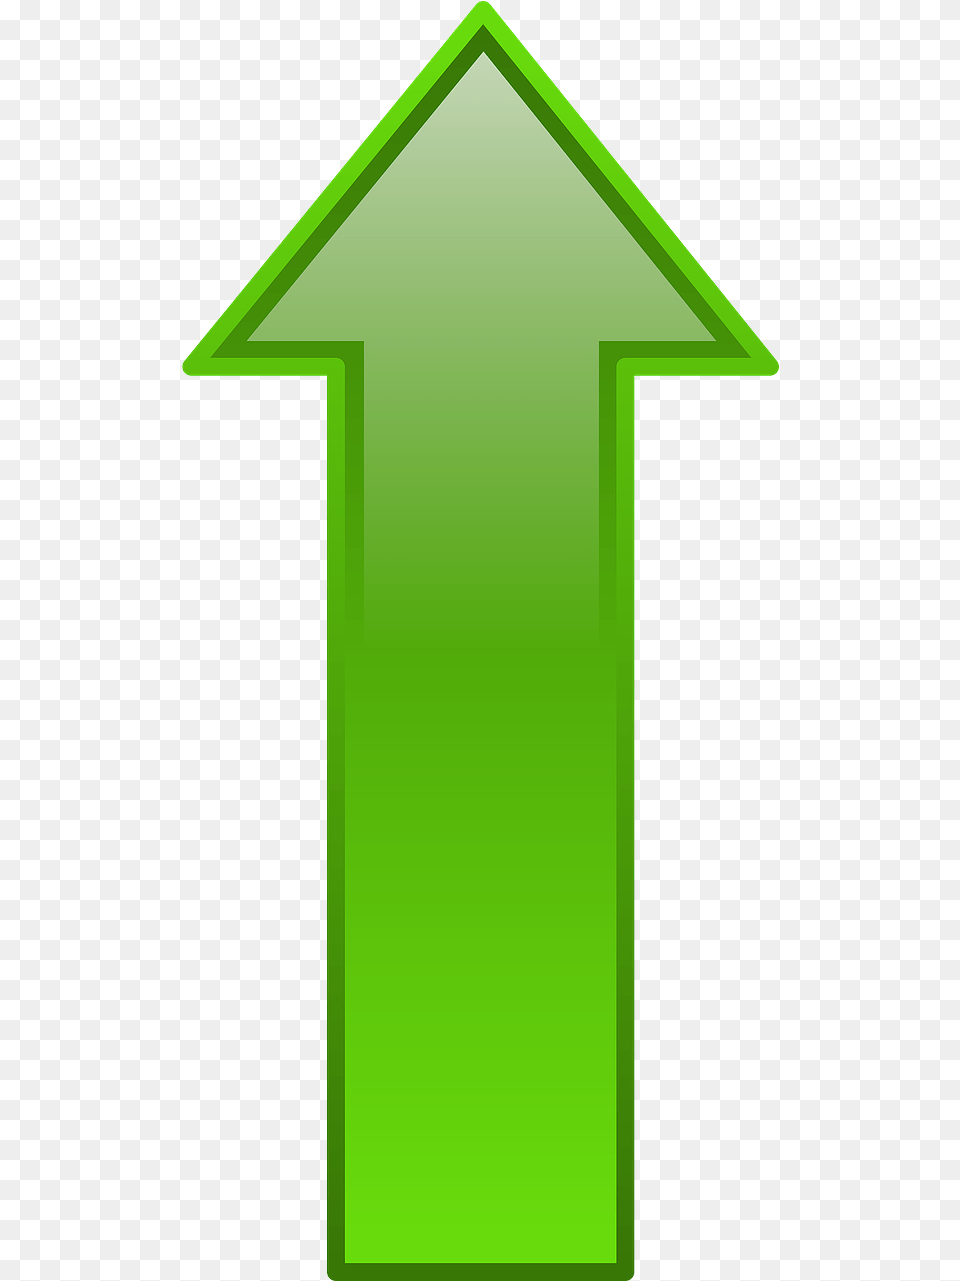 Progress Bar Meter Clipart Green Arrow Pointing Up, Symbol Png